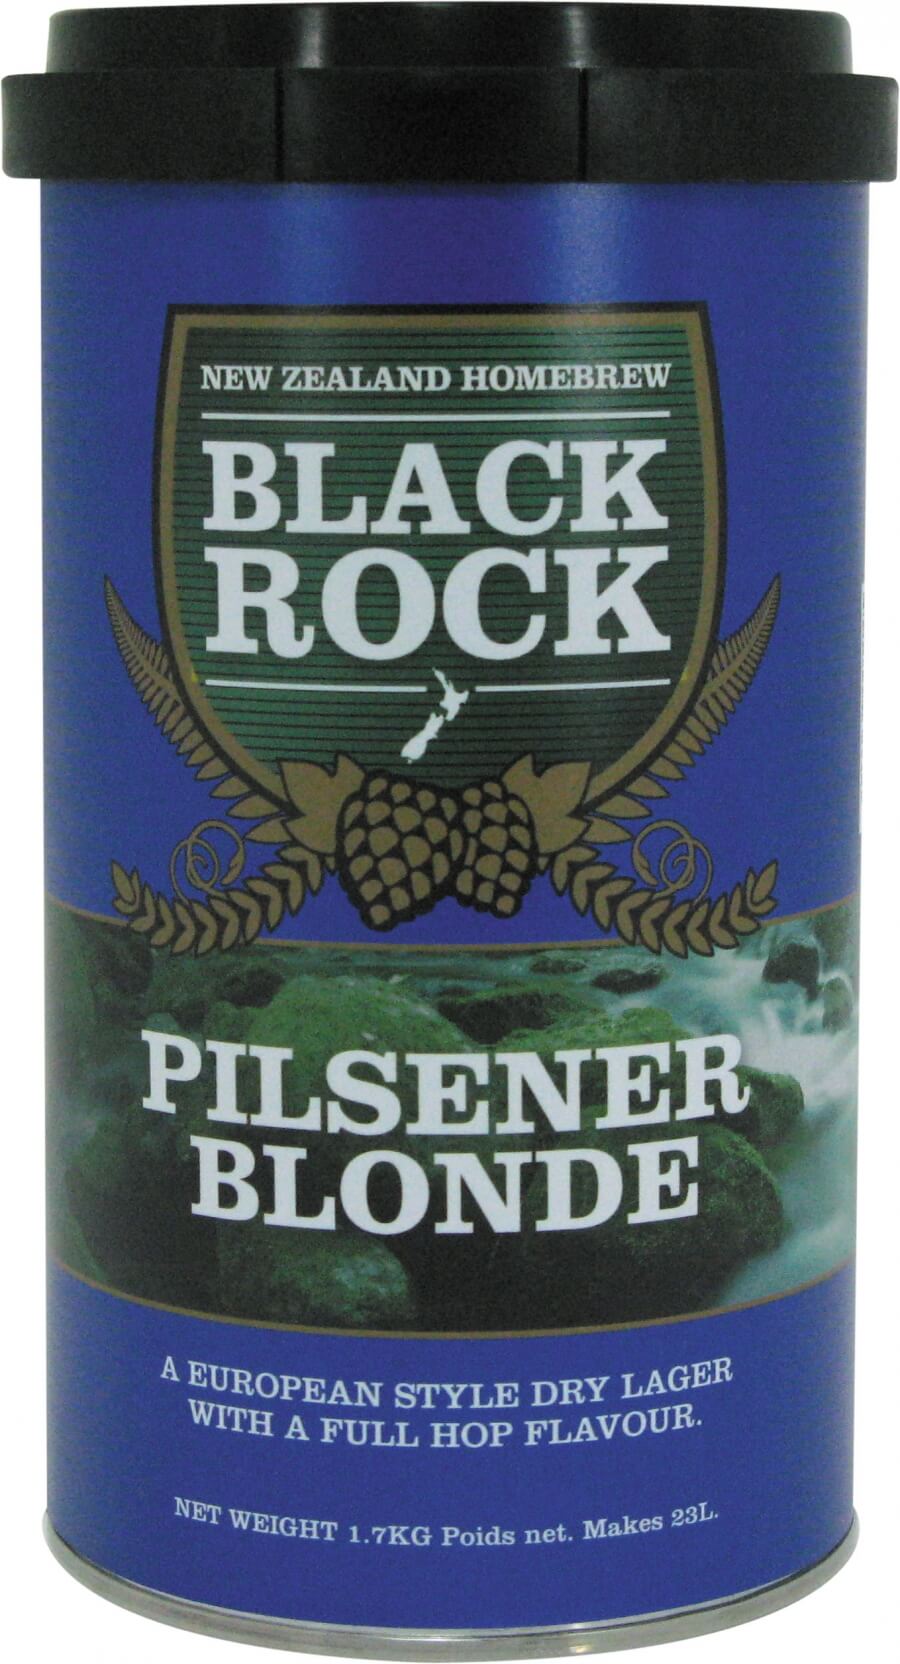 Black Rock Pilsner Blonde Beerkit 1.7kg UBREW4U